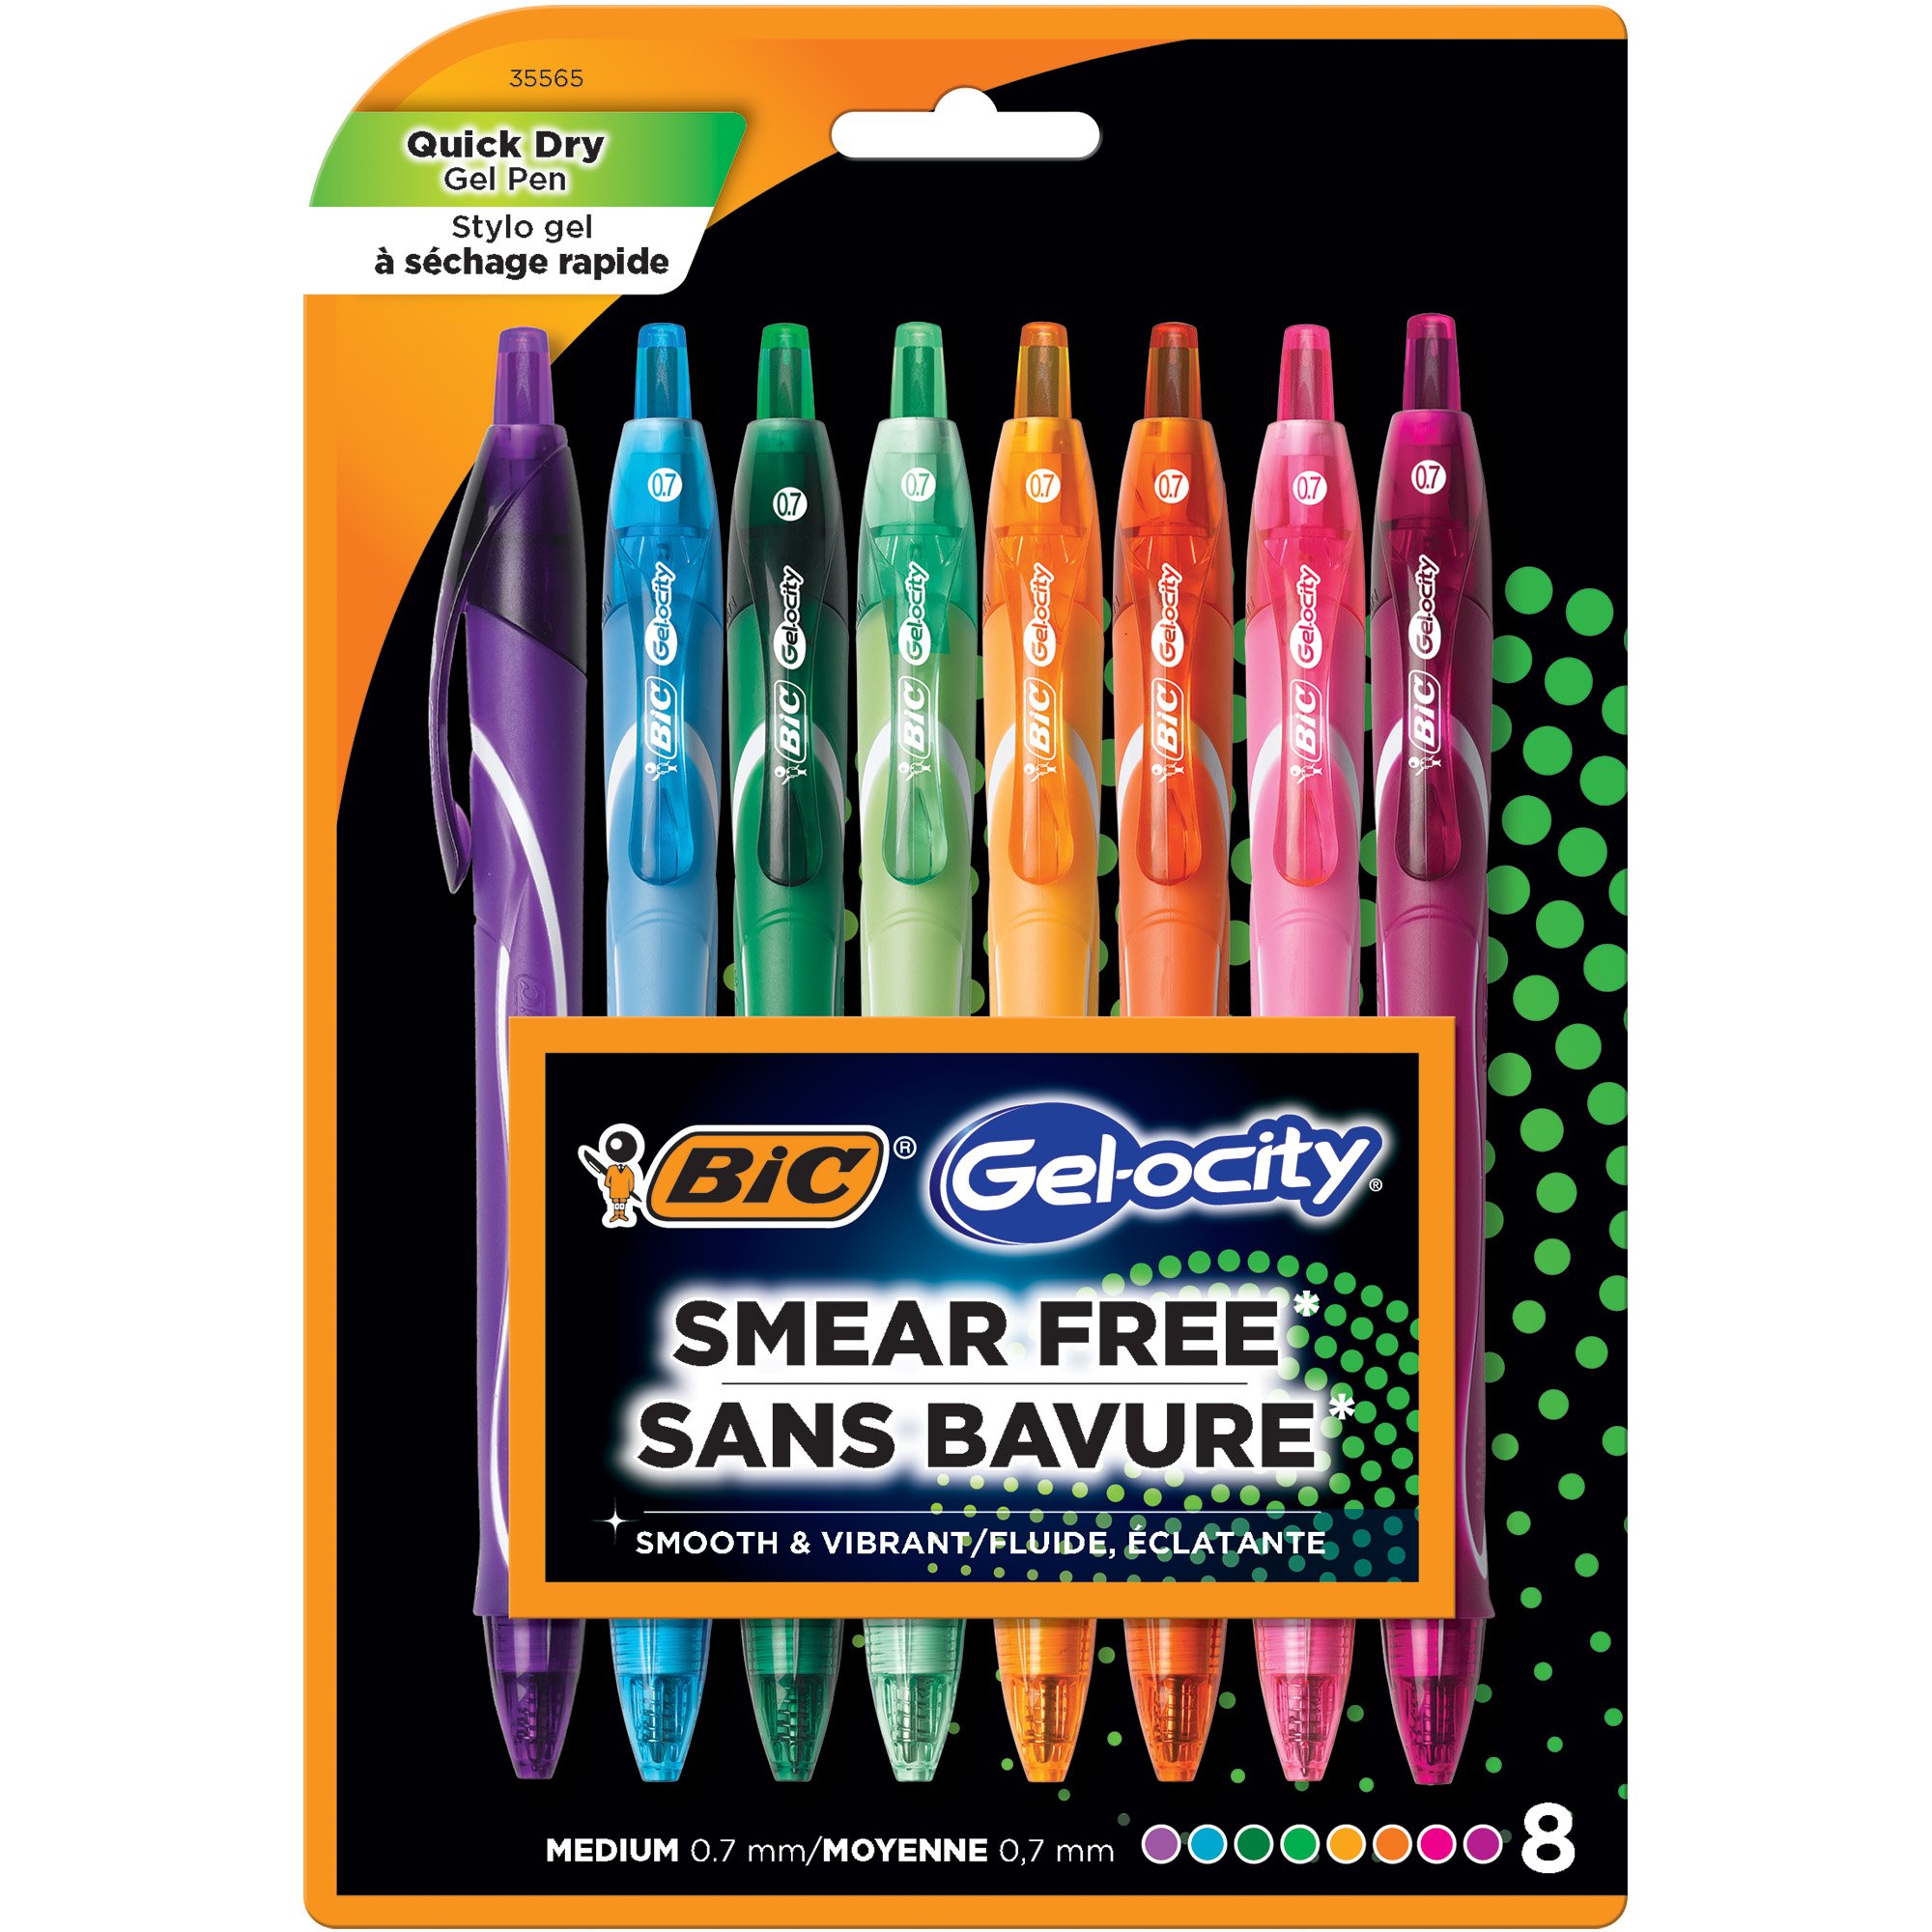 bic-gel-ocity-quick-dry-gel-pens-medium-point-retractable-0-7mm-3-color